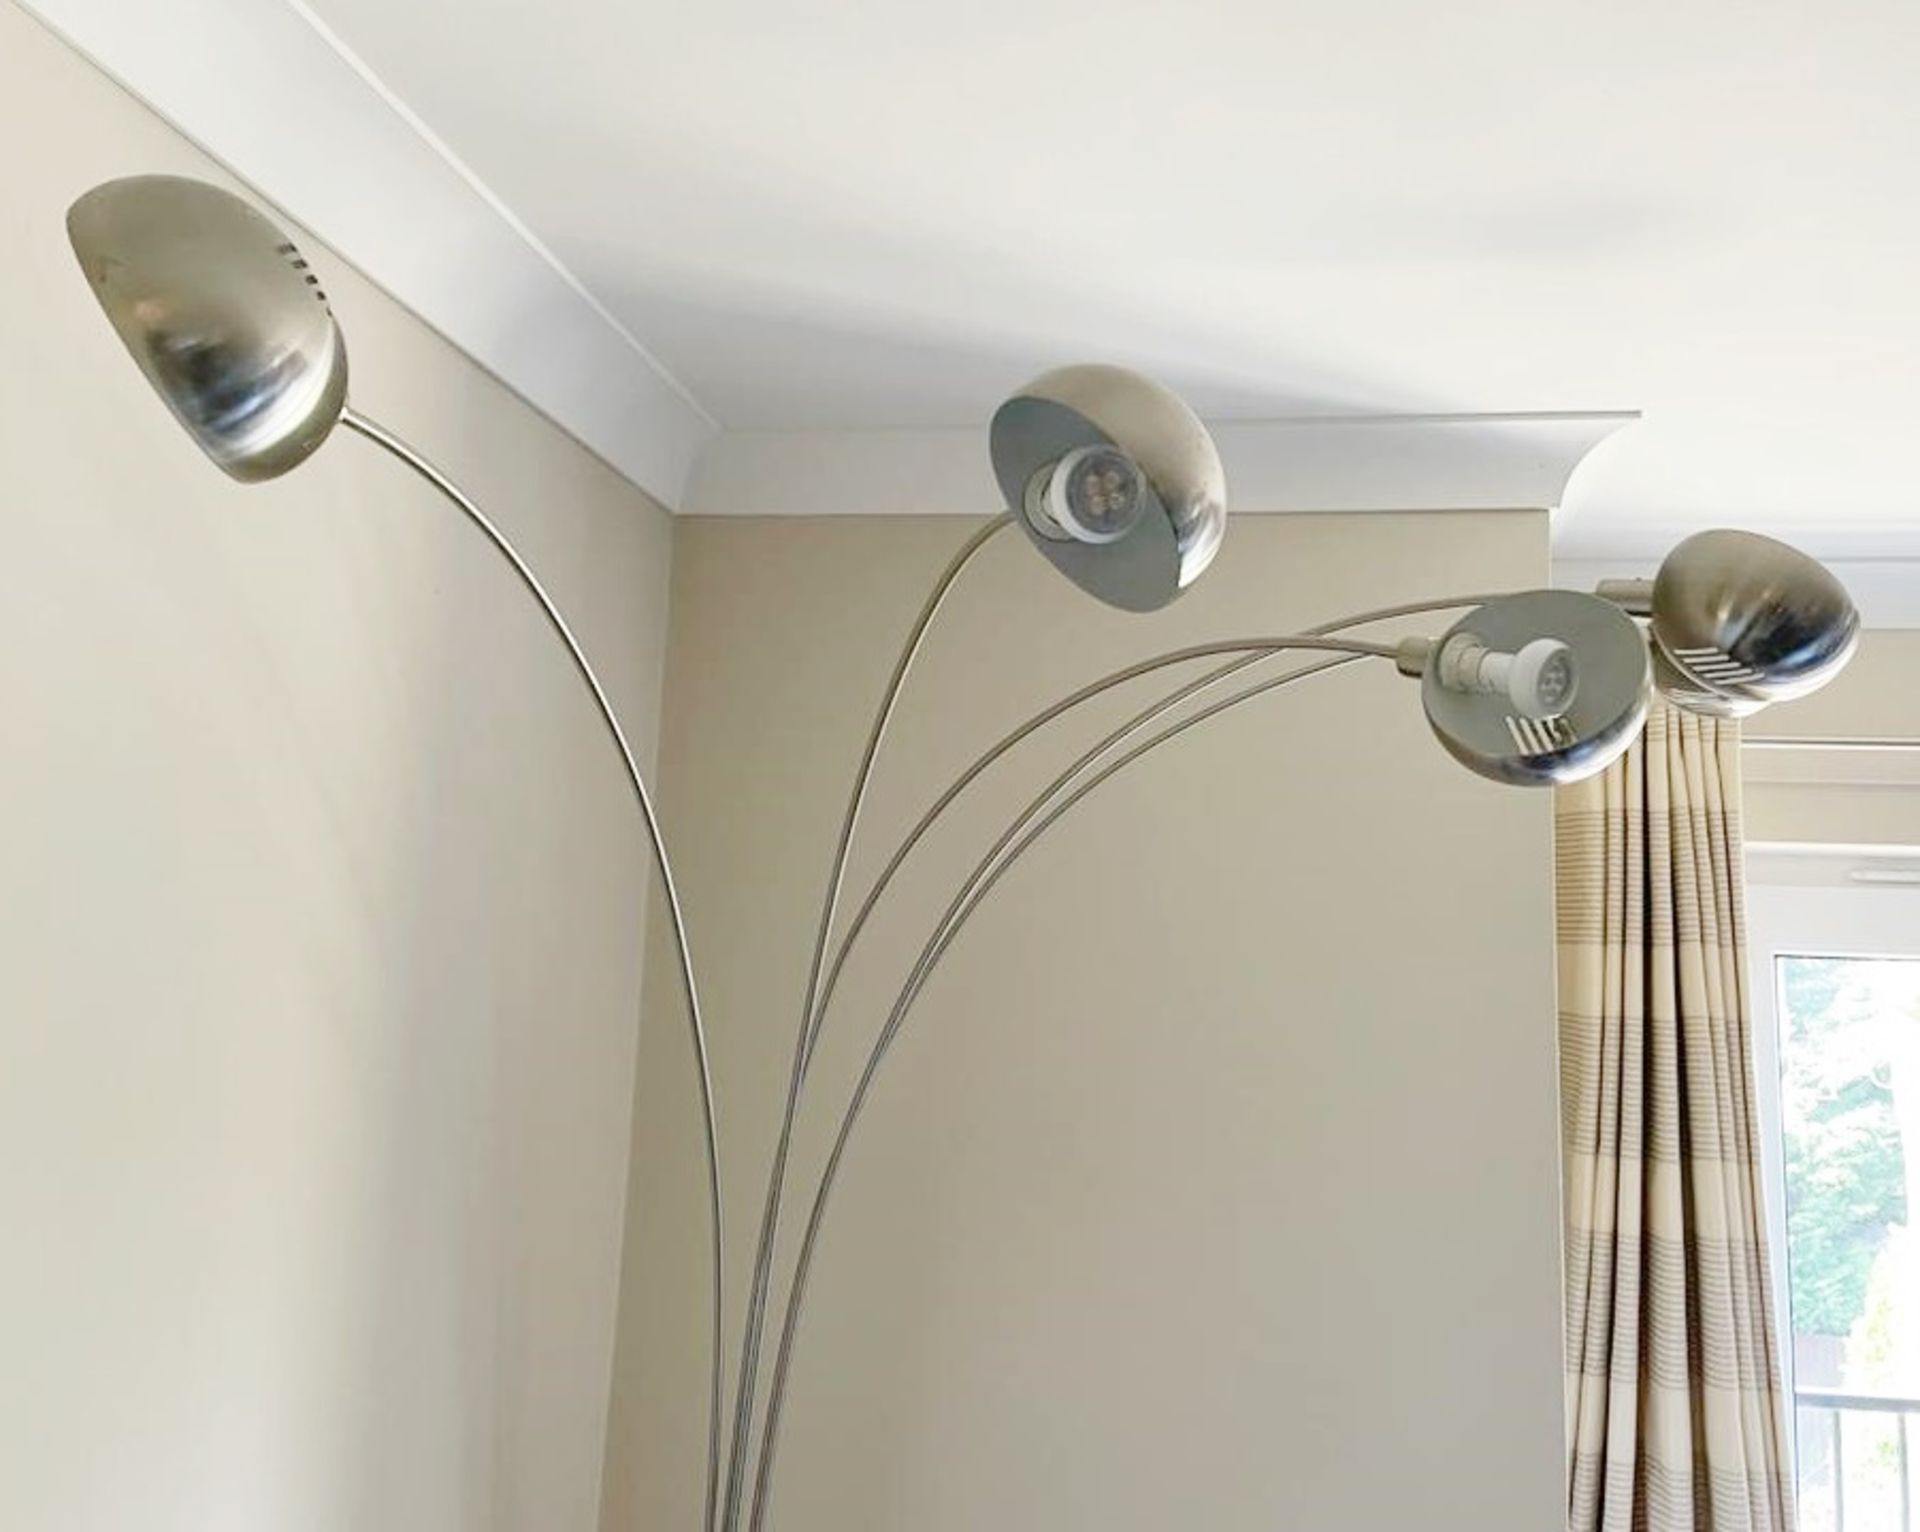 1 x Chrome Retro 1960's Style 5 Light Floor Lamp - Approx 8 Feet Tall - CL636 - Location: Hale,